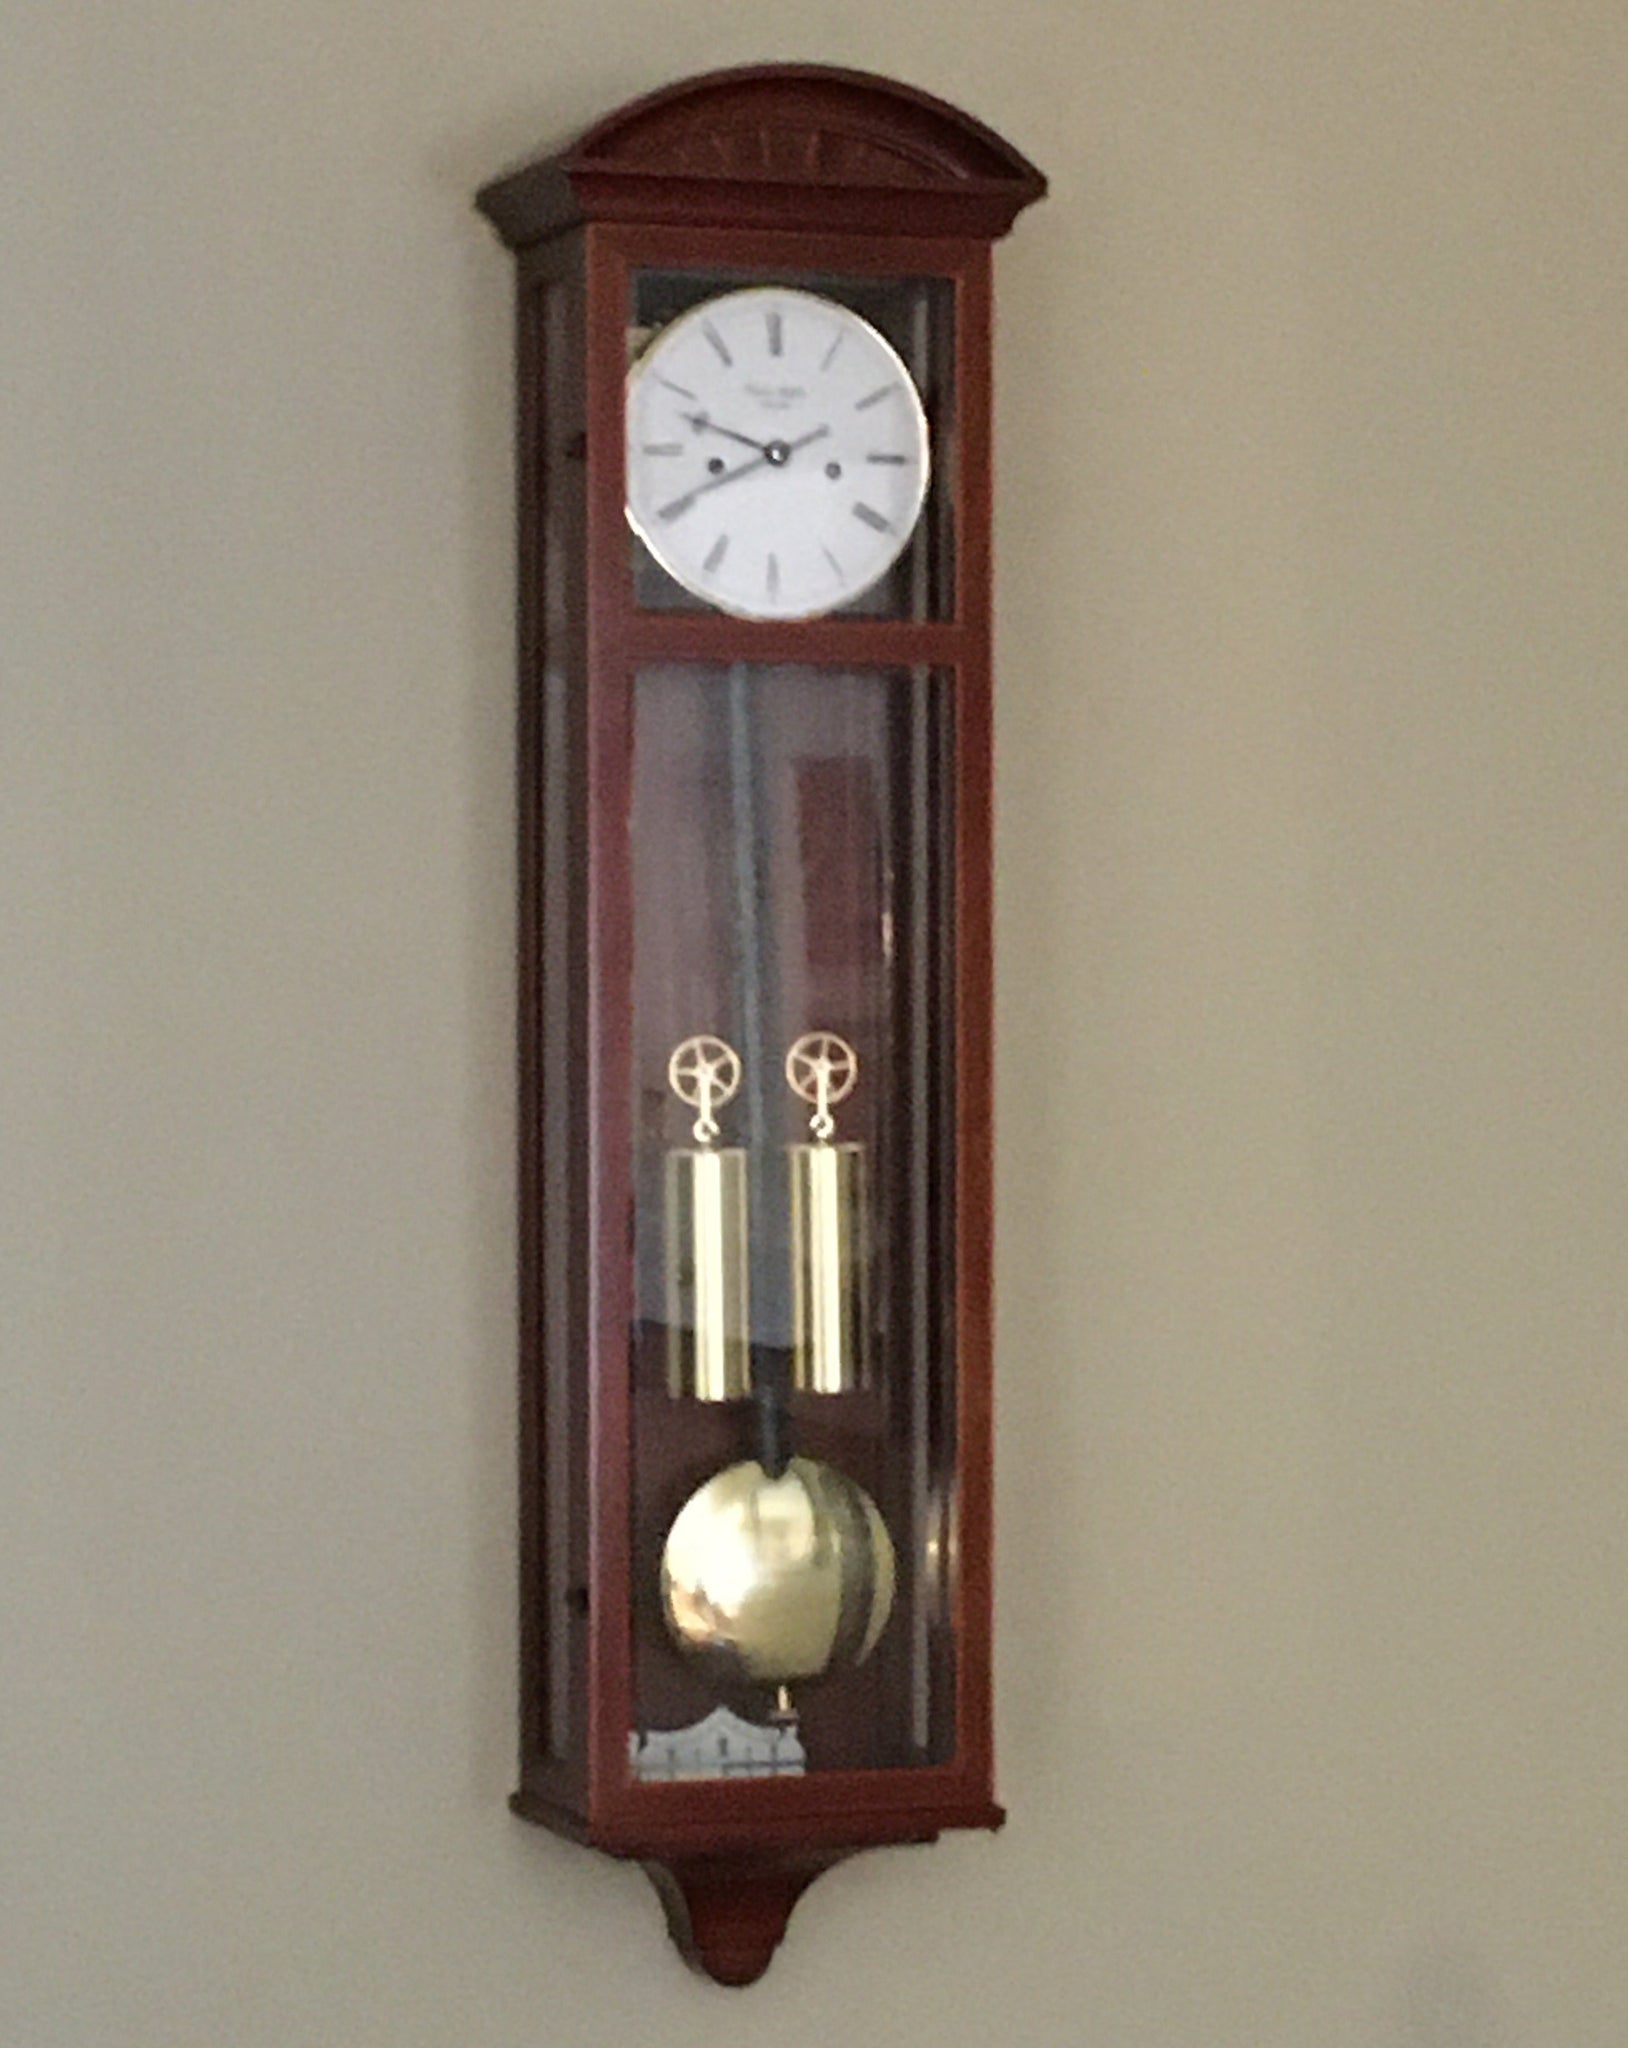 Vintage Sattler Wall Clock, SOLD